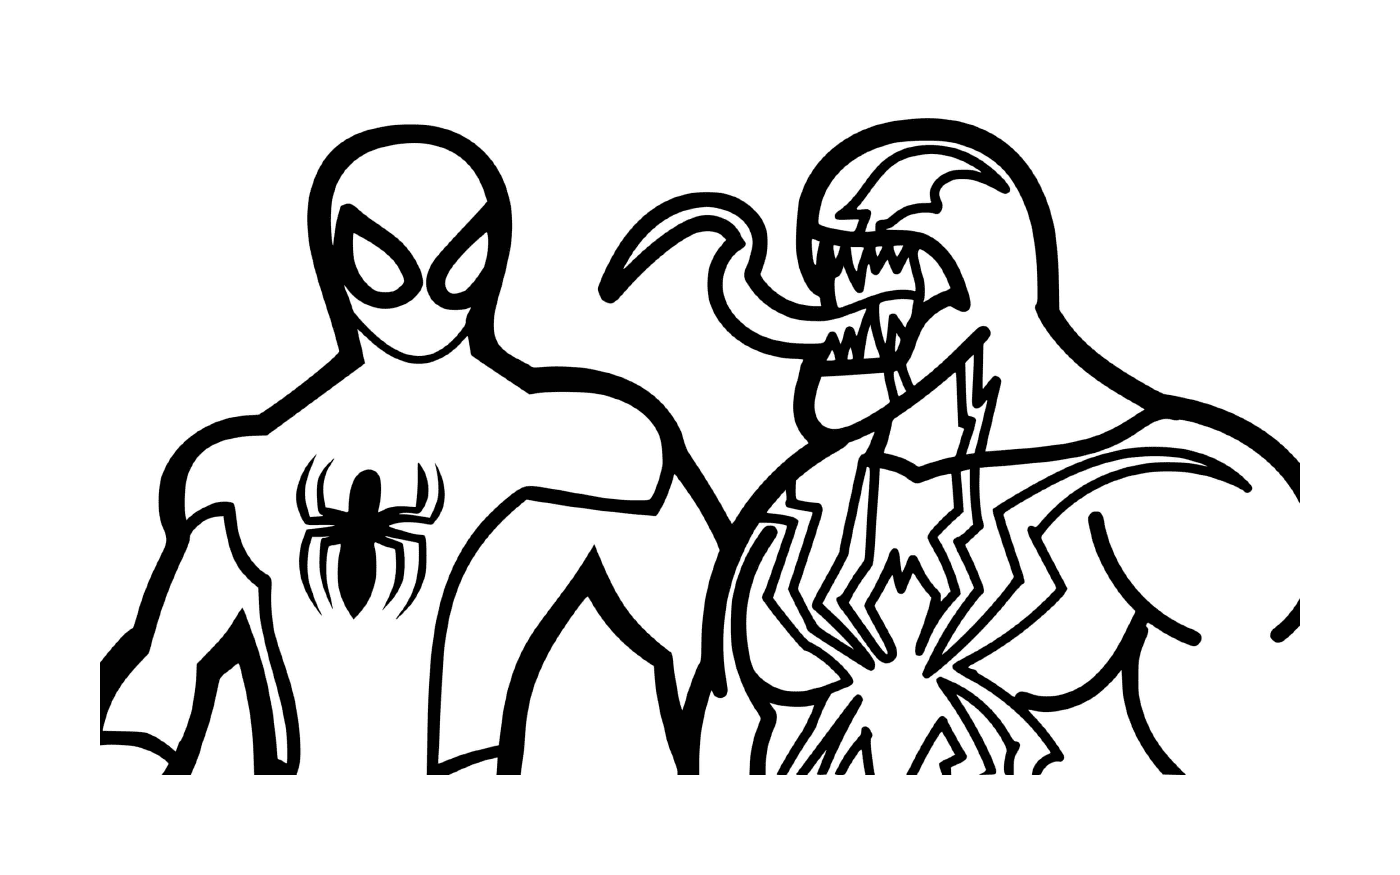  Homem-Aranha vs Venom 